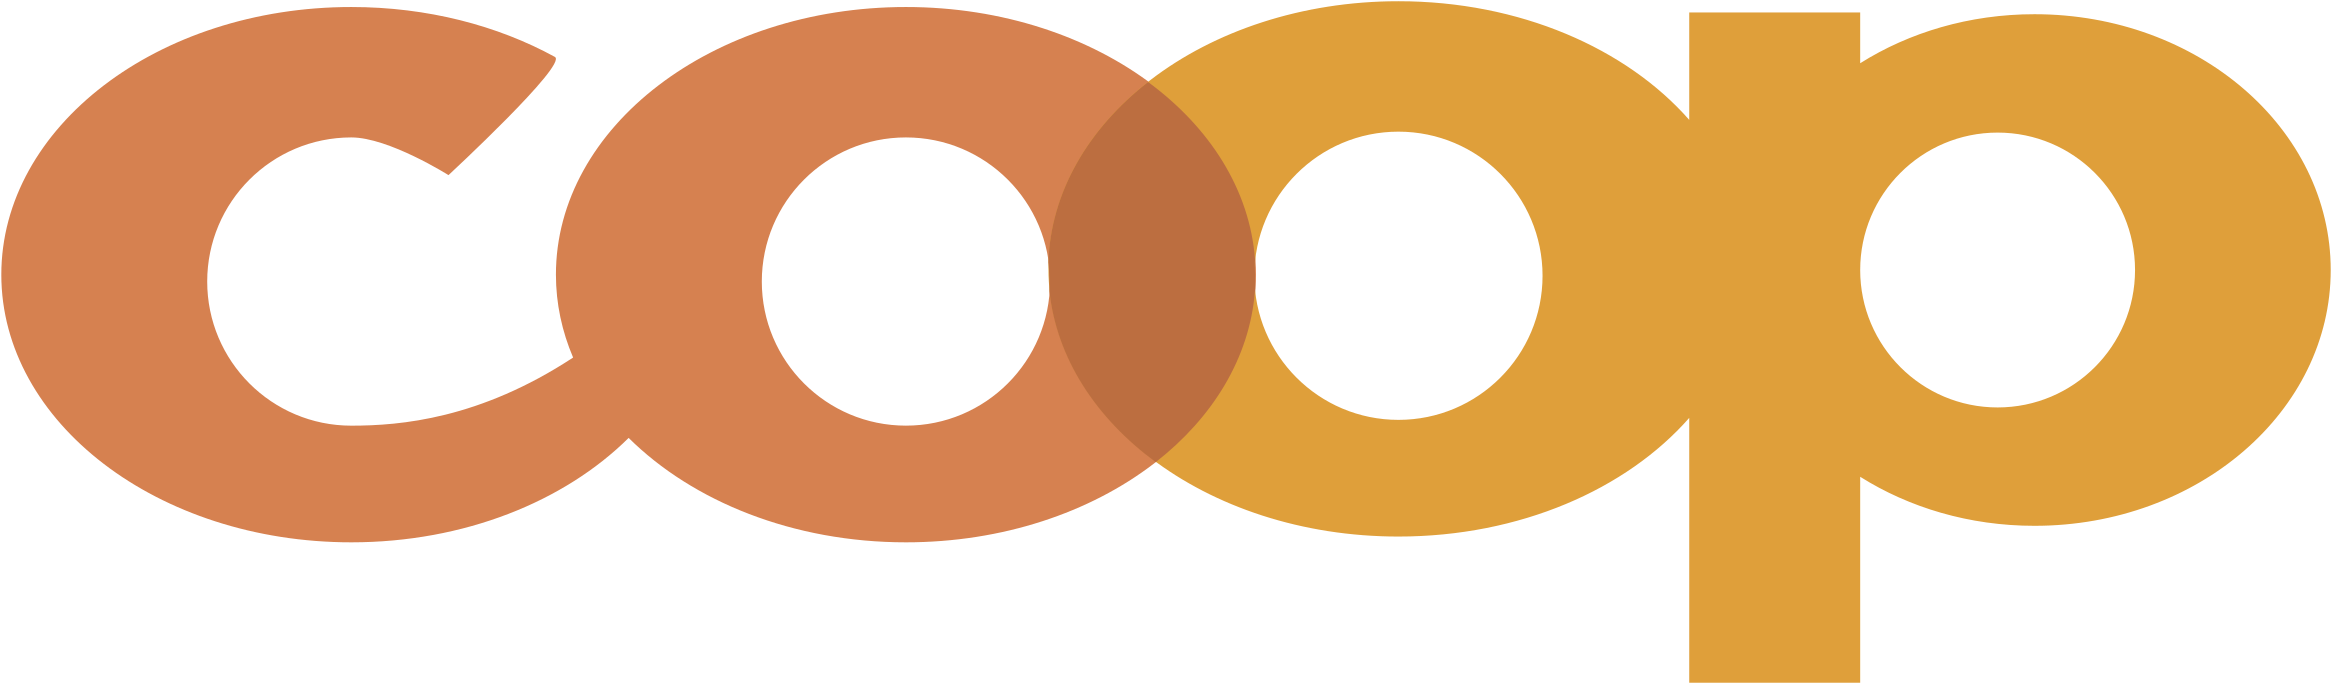 Coop Logo Png Transparent - Coop (2400x2400)